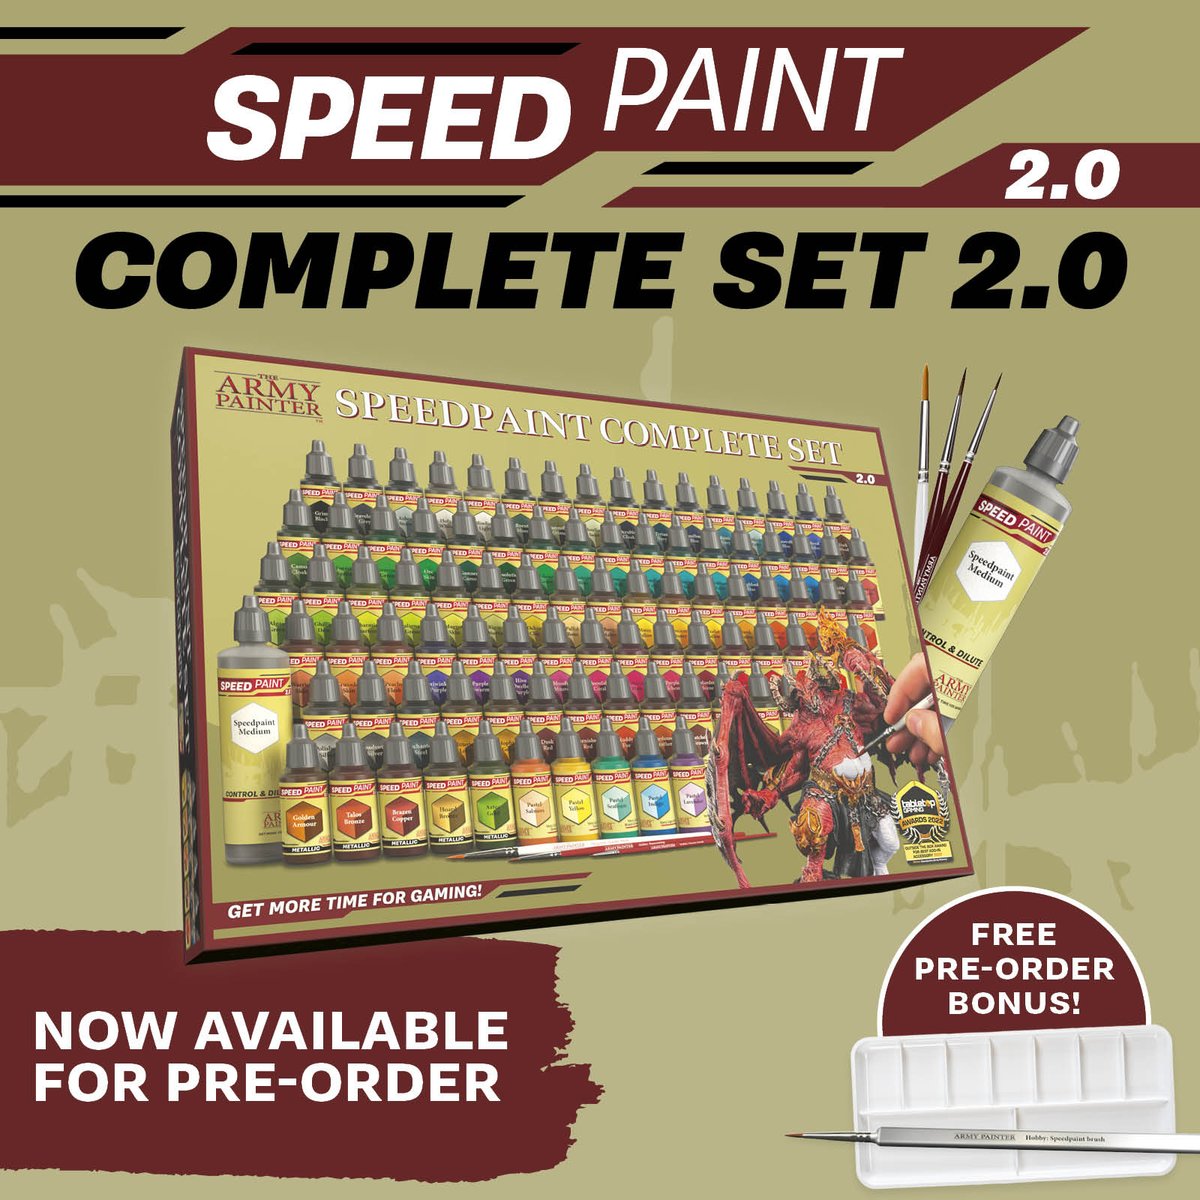 The Army Painter Speedpaint 2.0 Complete Set